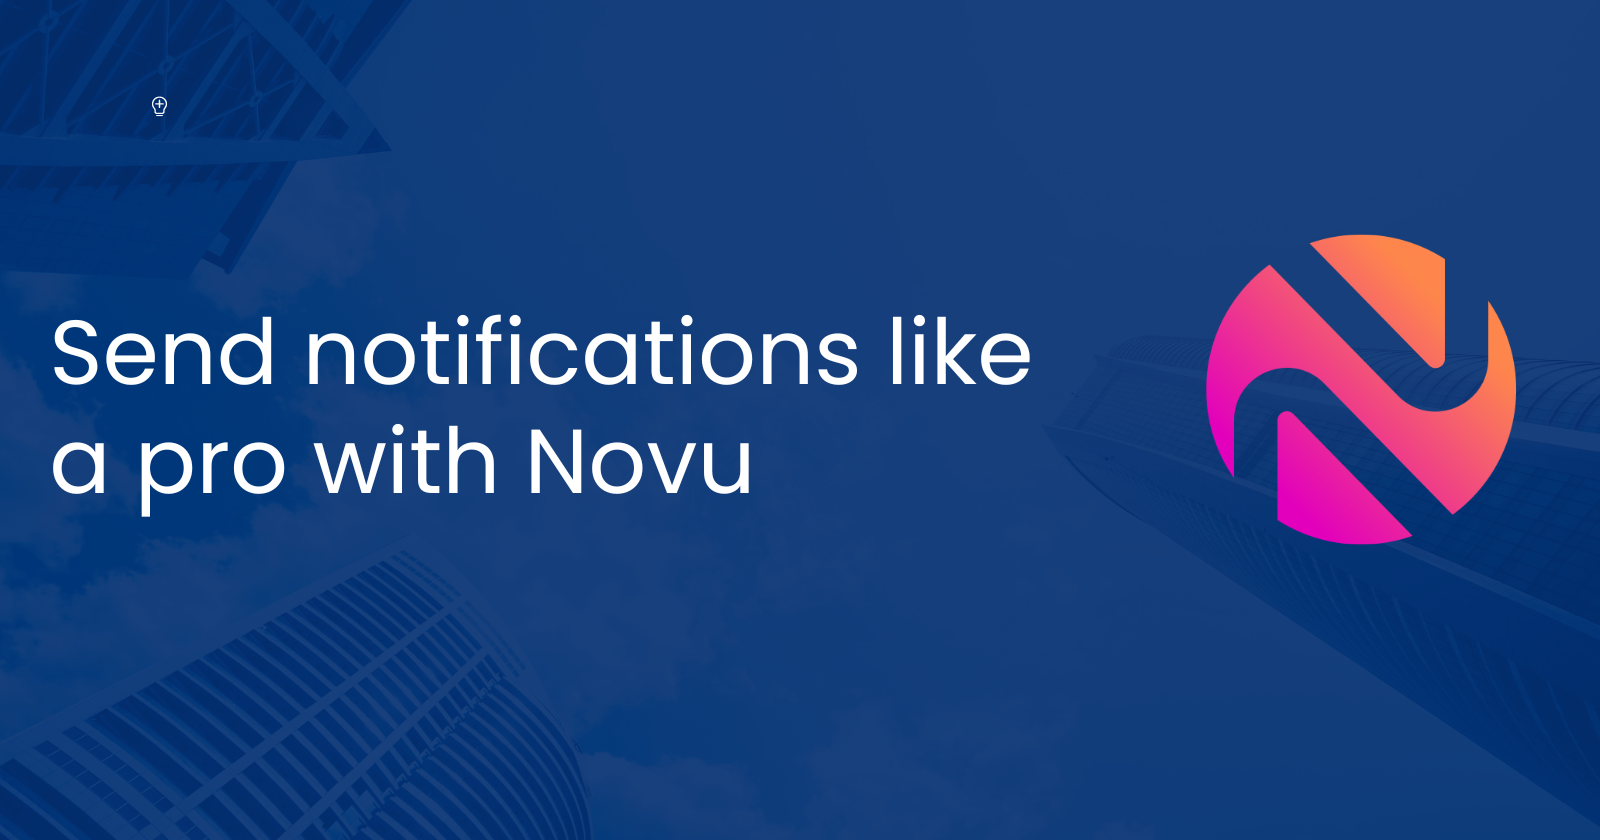 Send notifications like a pro with Novu 🚀